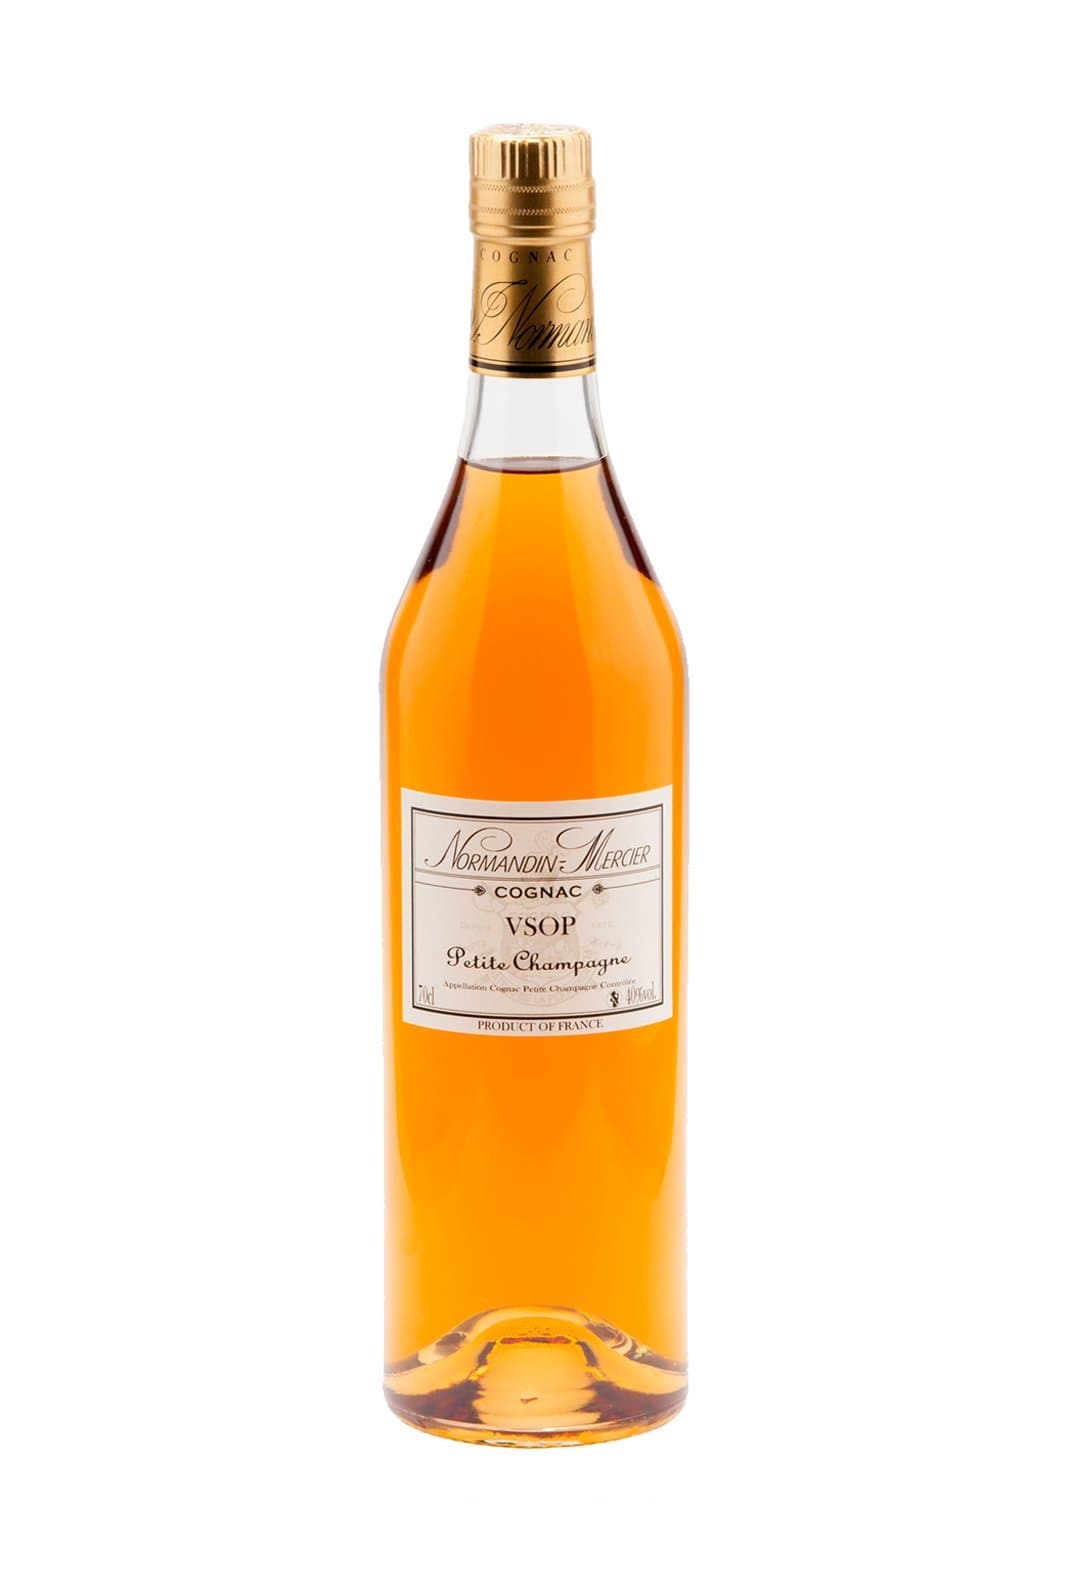 Normandin-Mercier Cognac VSOP 7 years Petite Champagne 40% 700ml | Brandy | Shop online at Spirits of France